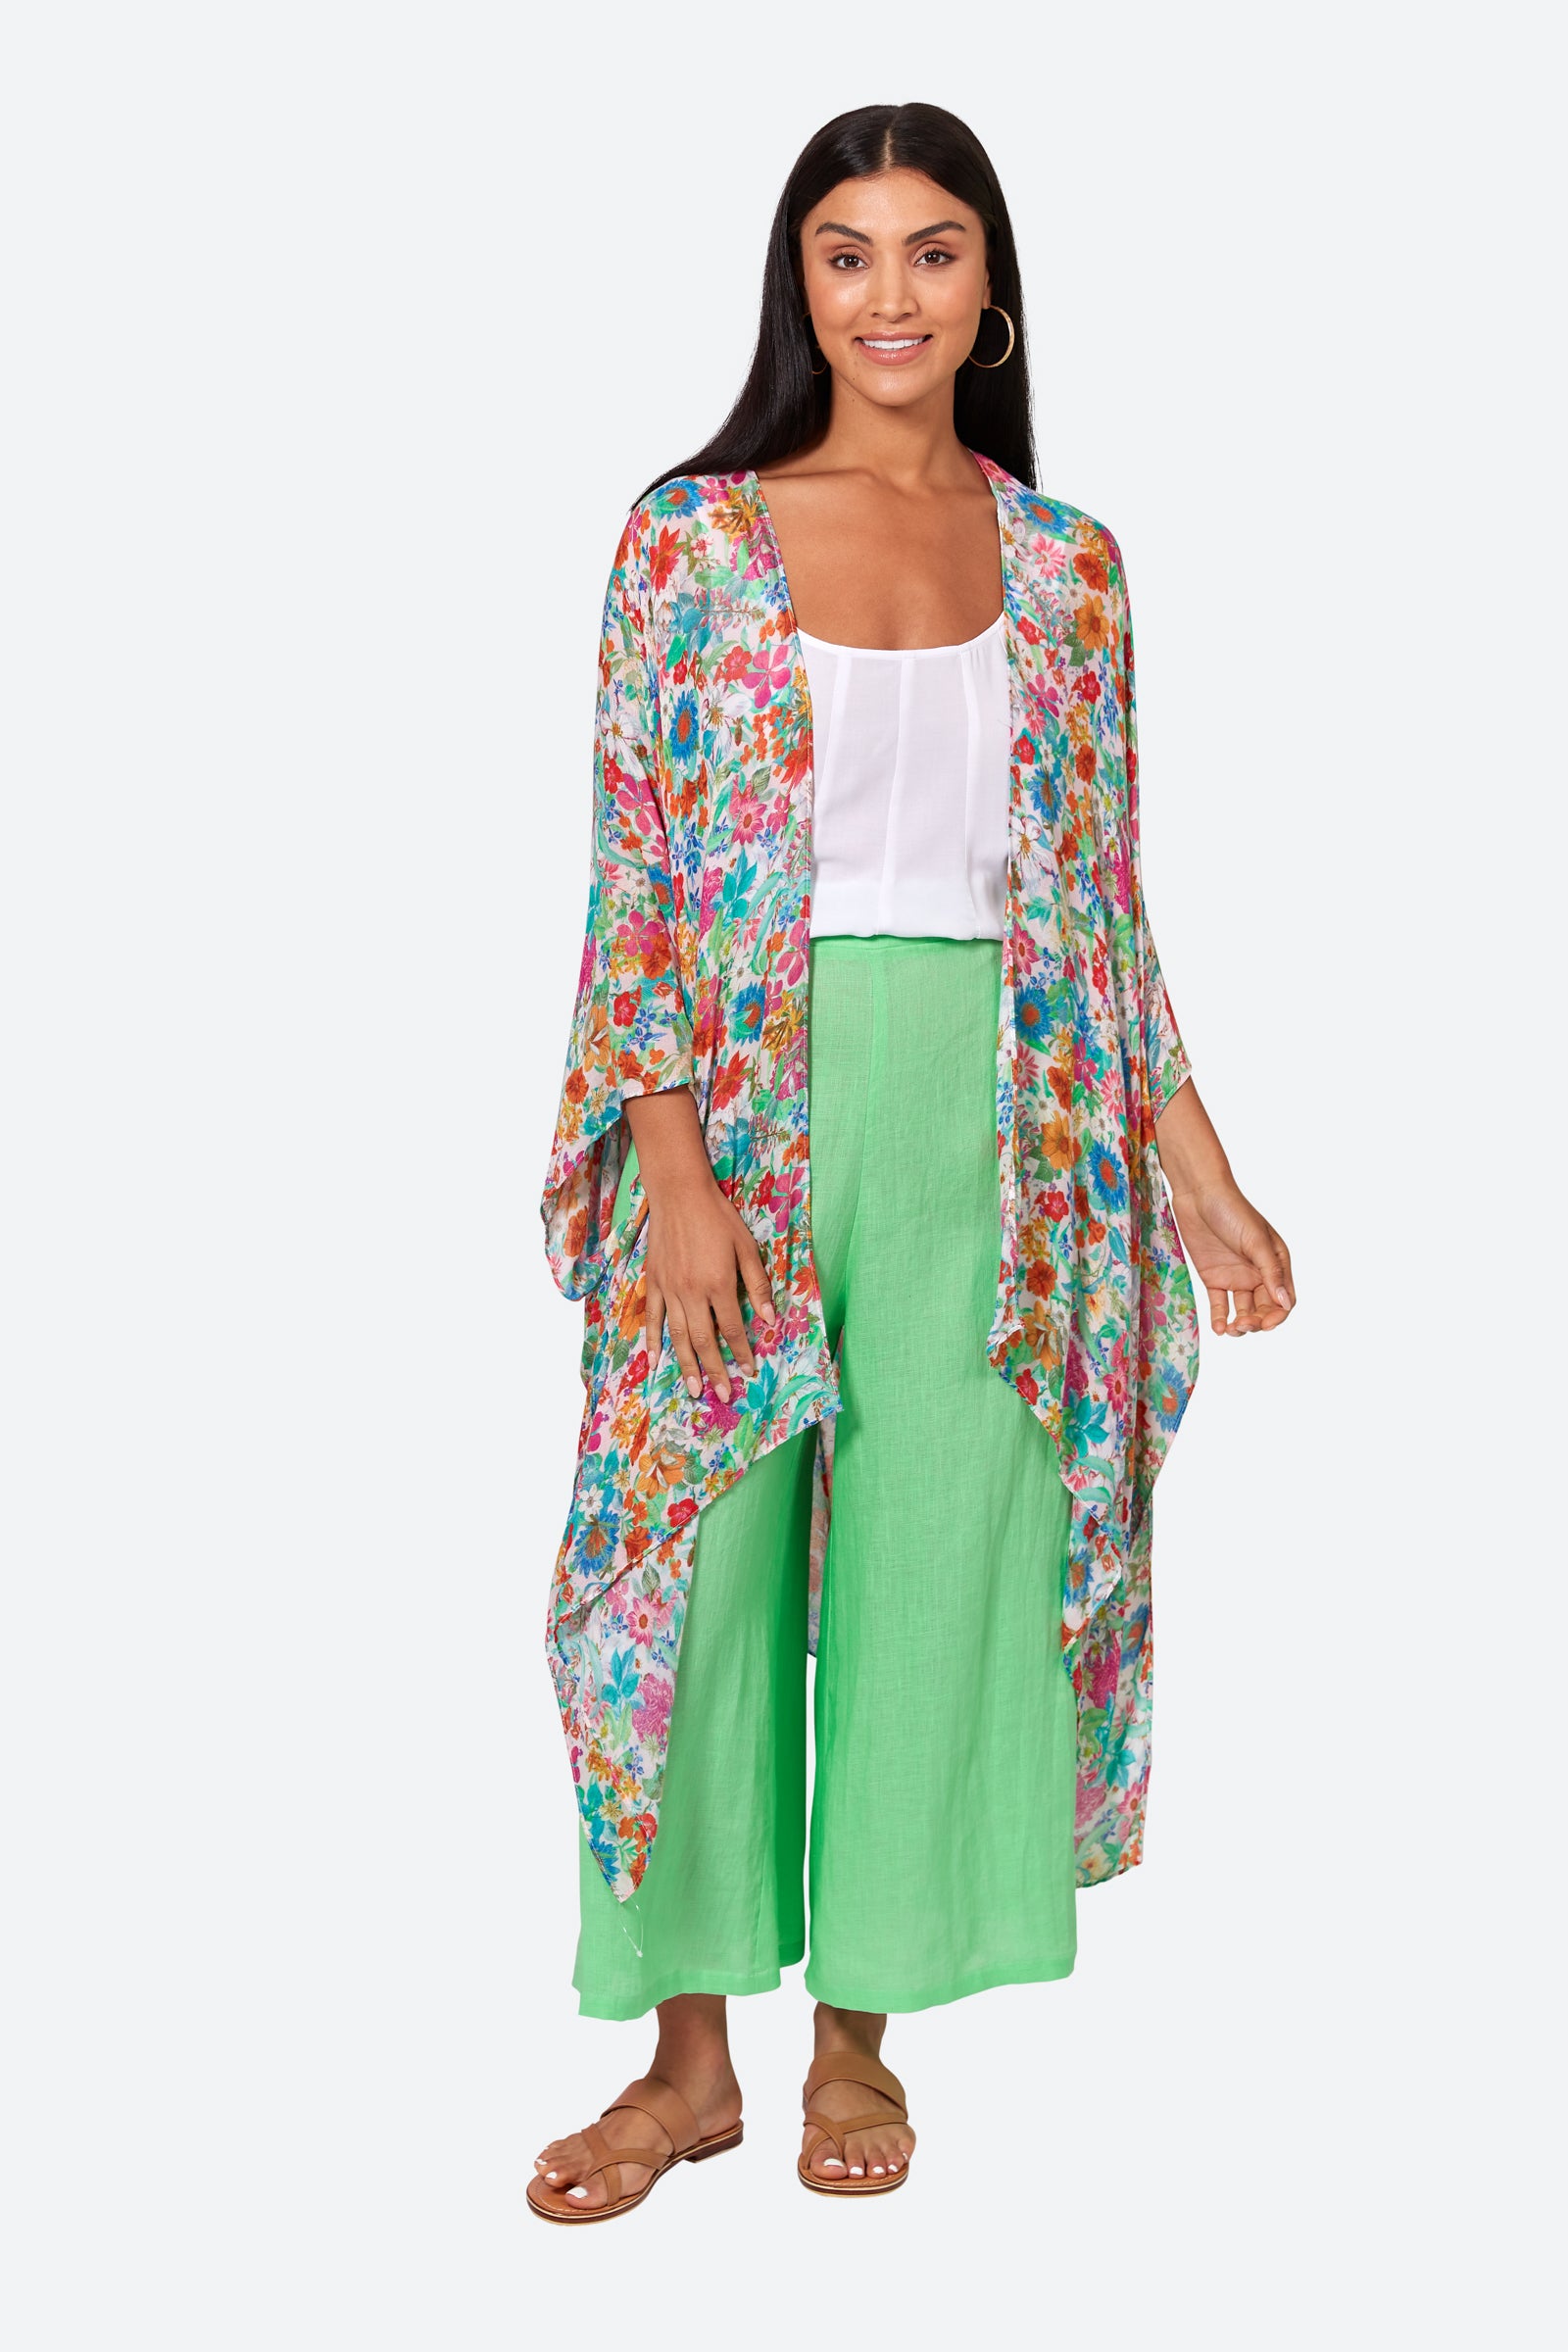 Esprit Cape - Pink Flourish - eb&ive Clothing - Kimono Cape Long One Size